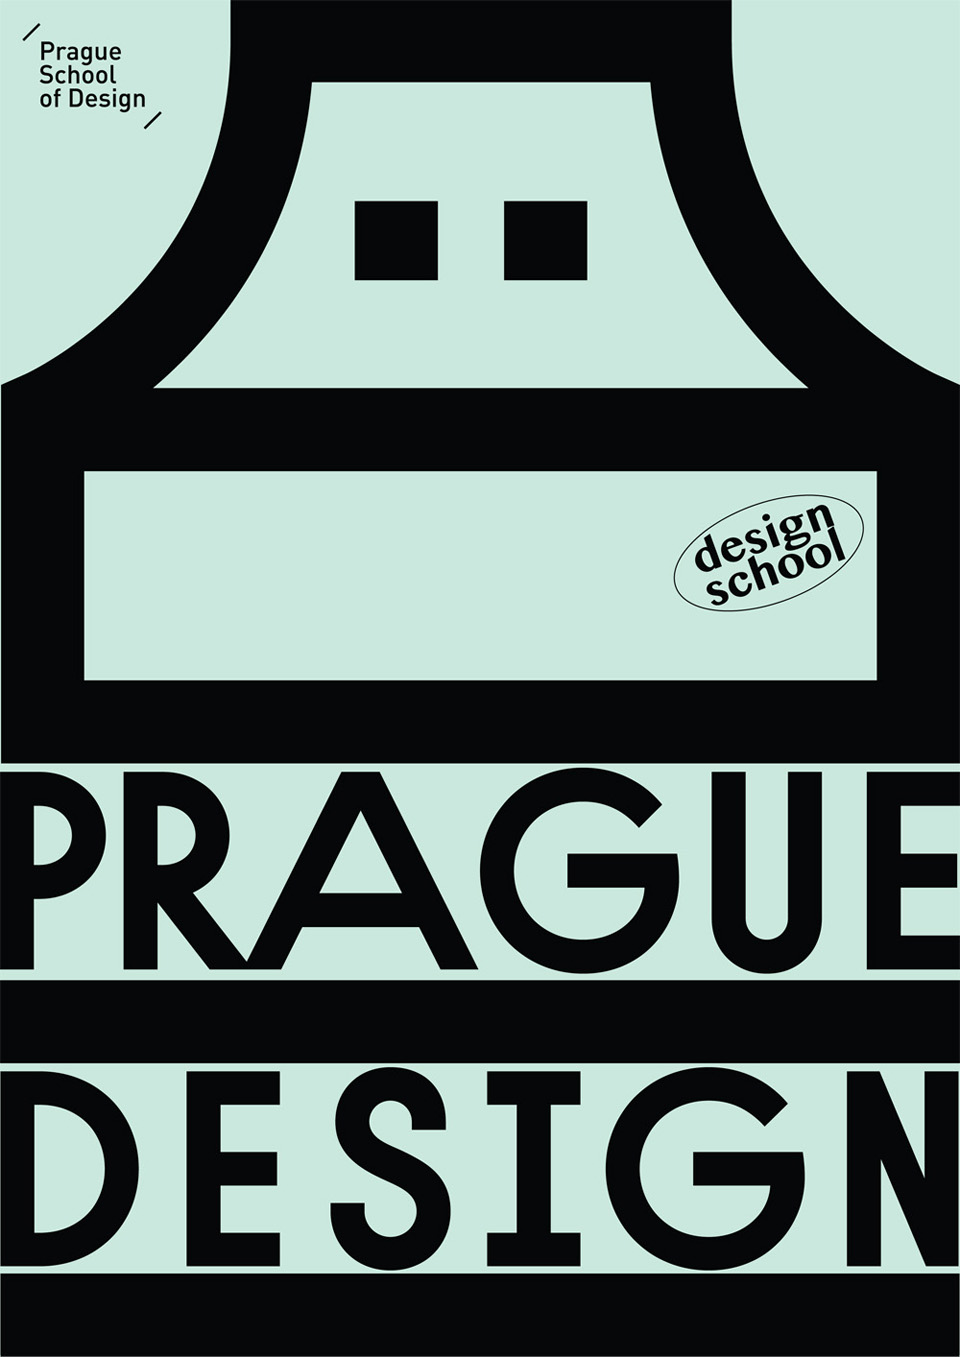 Identity for summer school of design in Prague 2014 Post Image 1